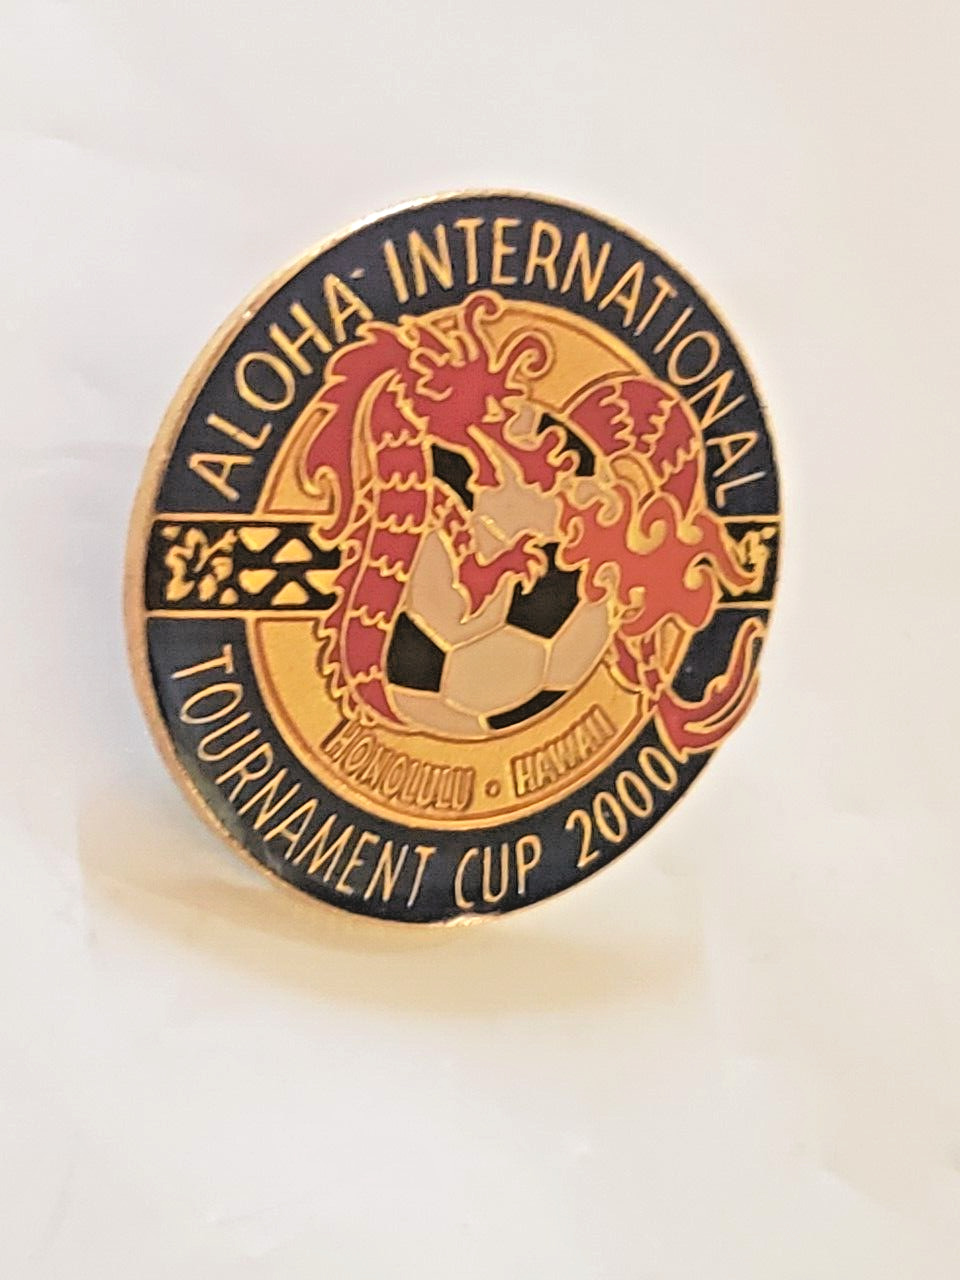 Vintage Aloha International Soccer Tournament Cup 2000 pin